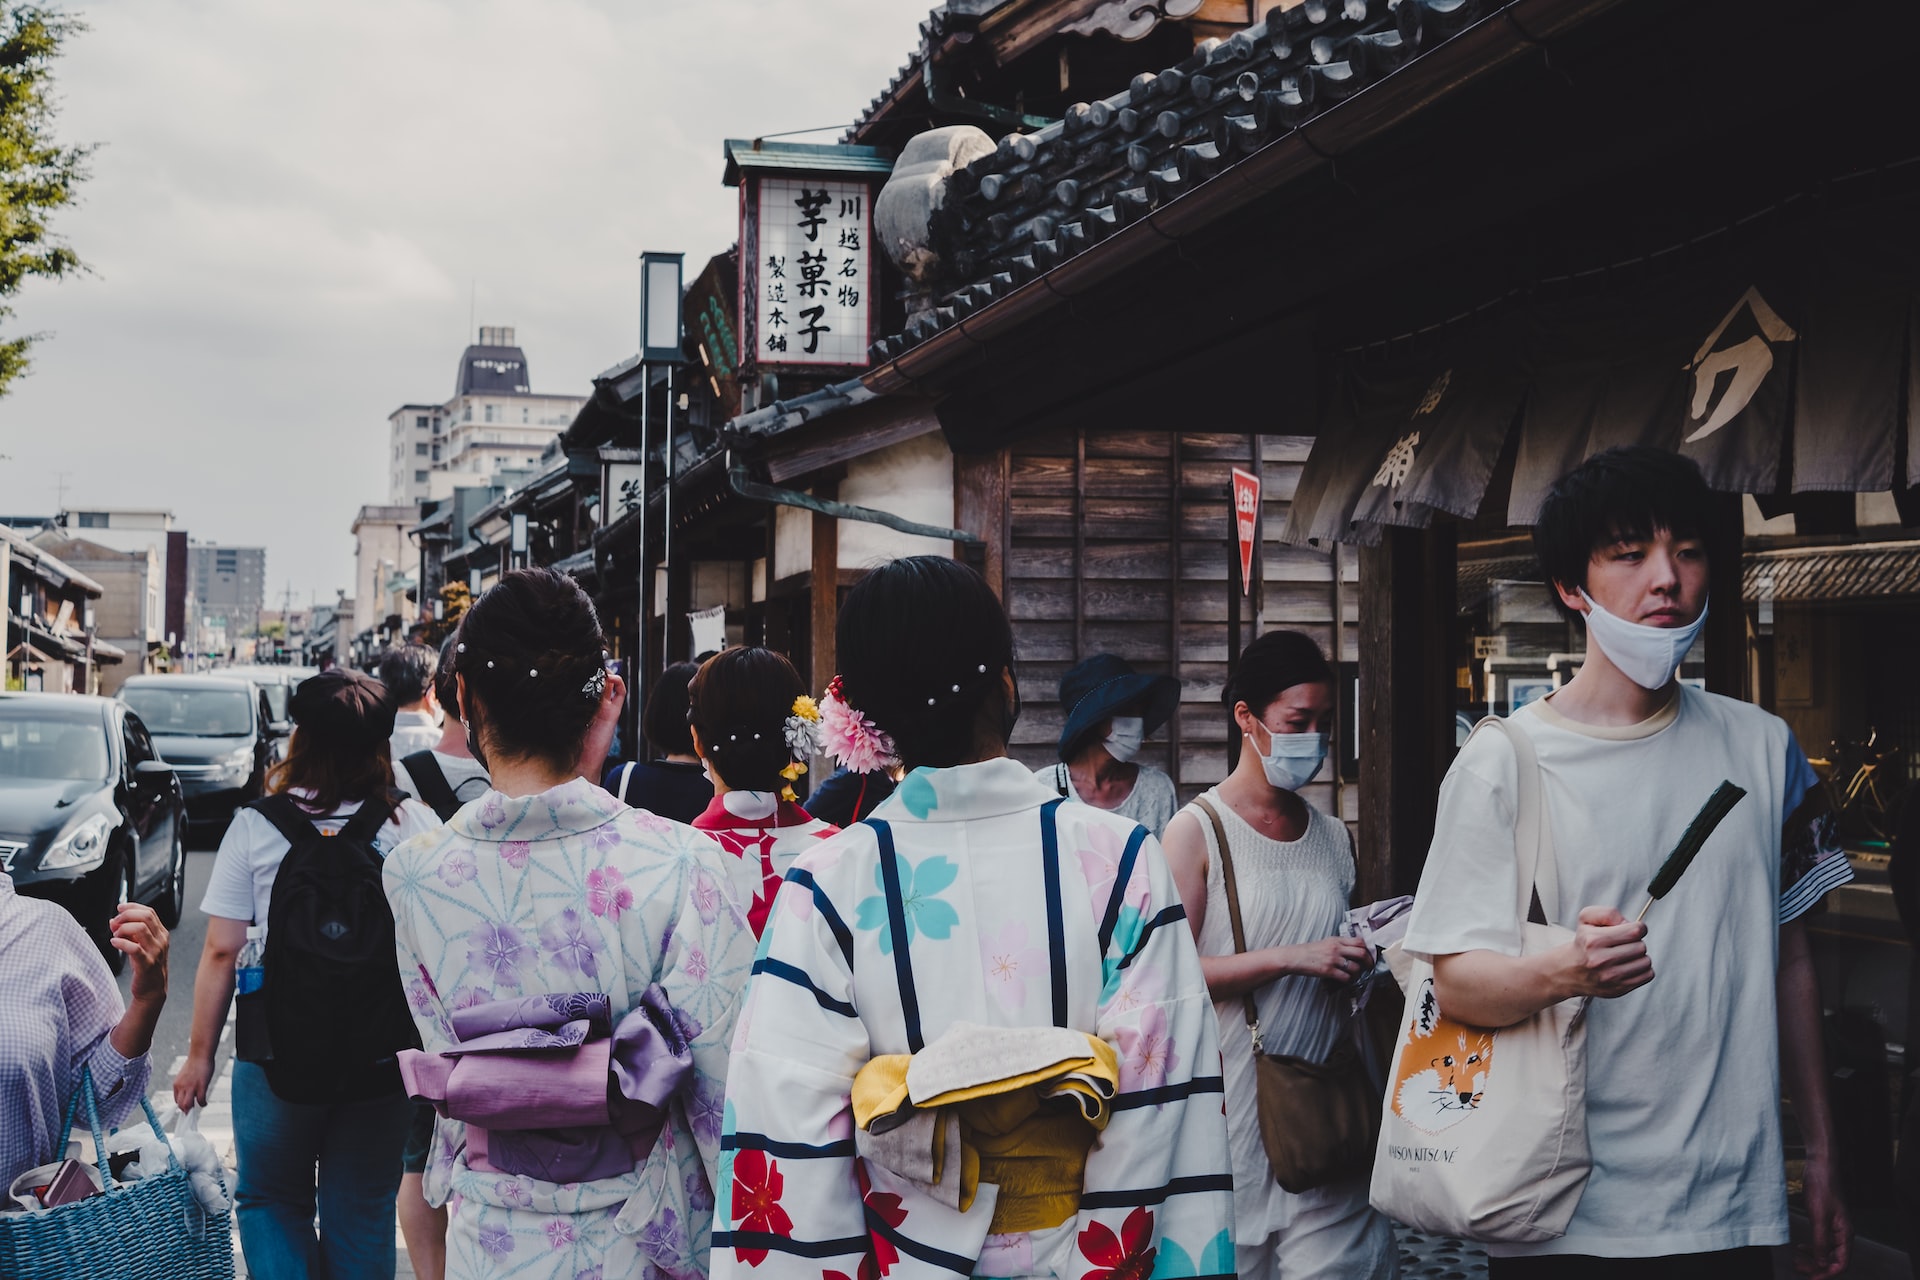 Japanese people walking